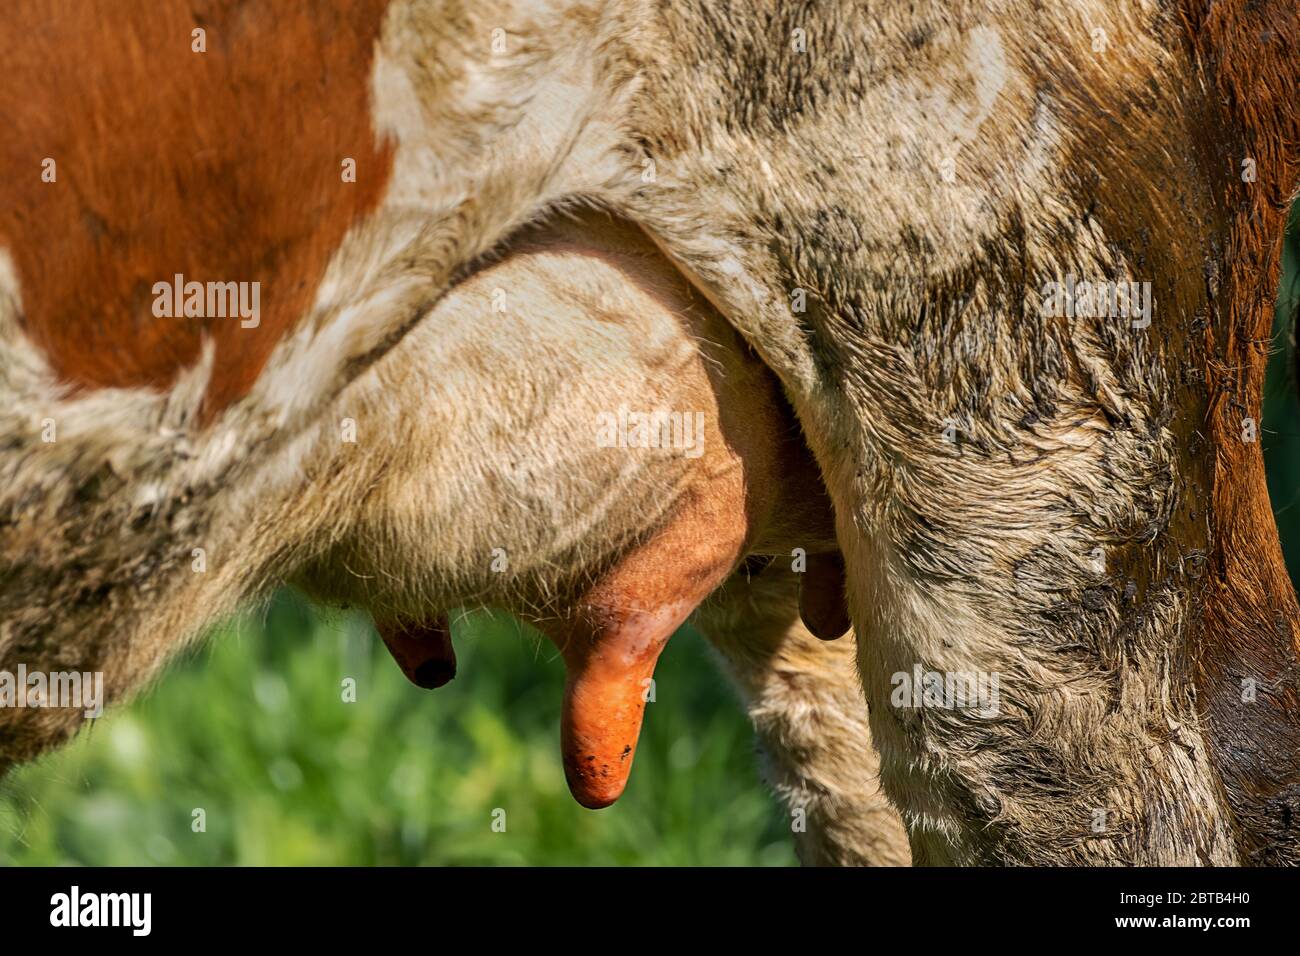 mammelle di una mucca bianca macchiata di colore marrone con pelliccia sporca Foto Stock